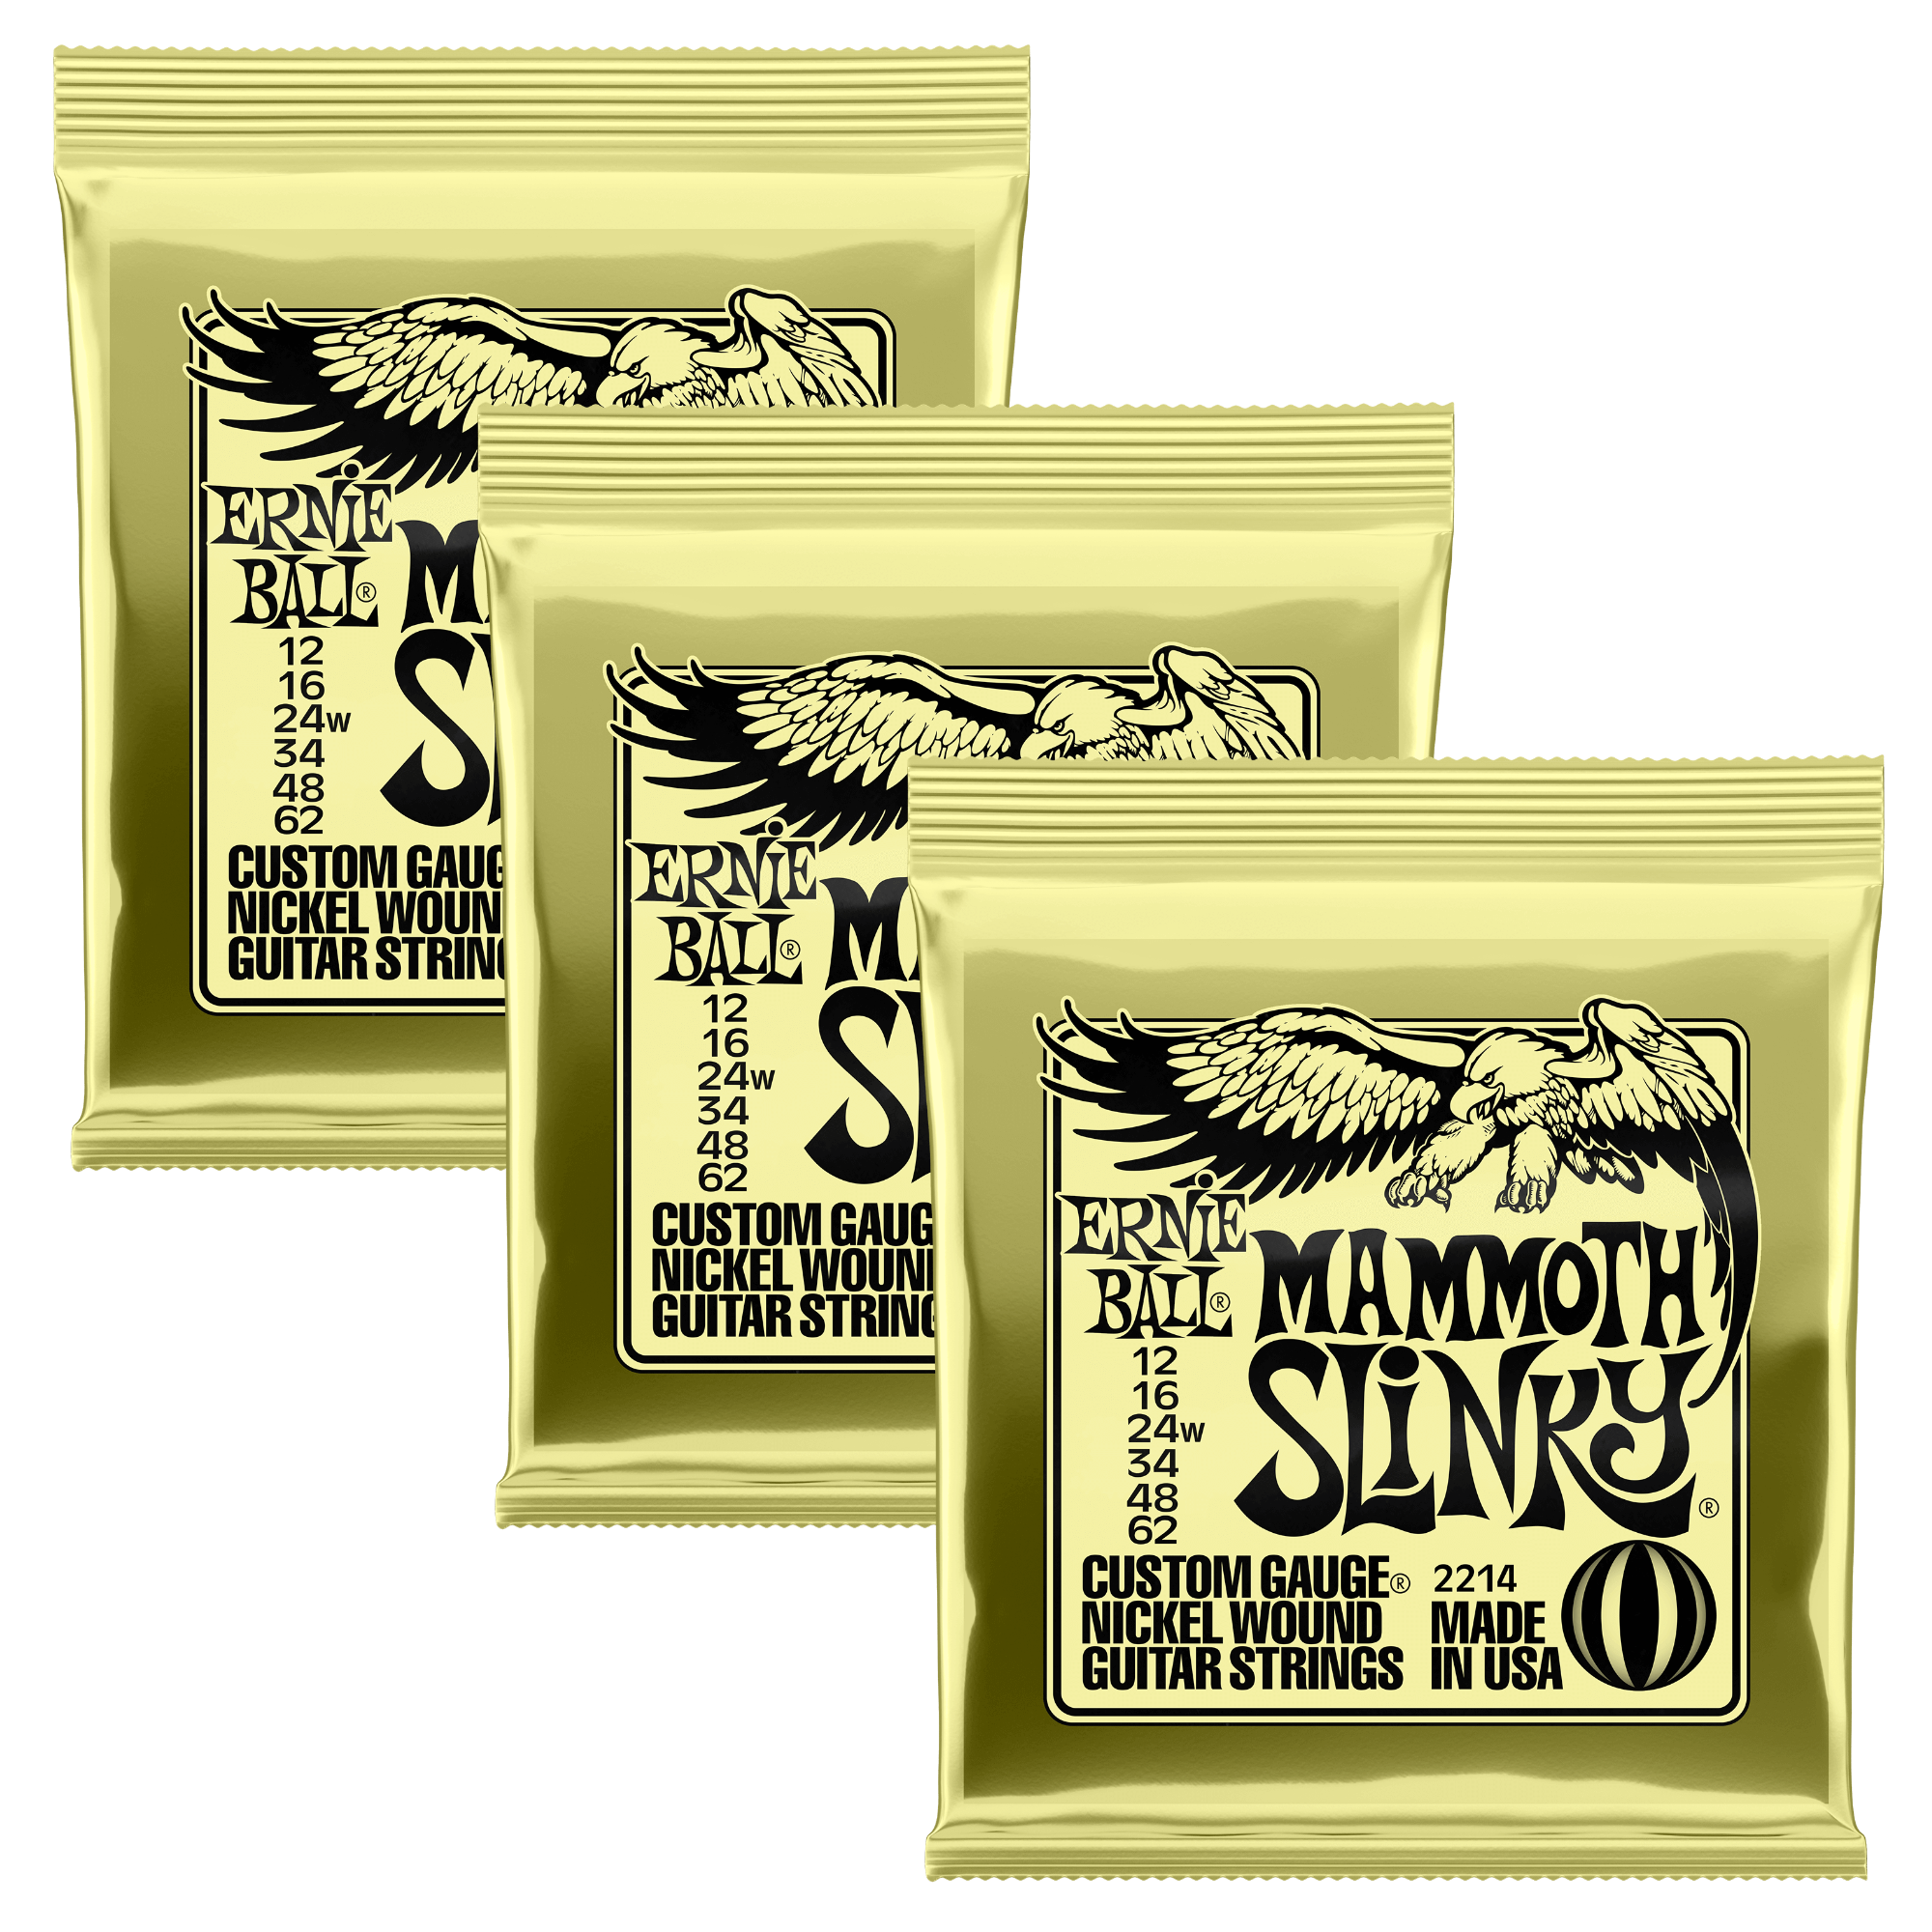 3x (3 sets) Ernie Ball Mammoth Slinky Custom Gauge Nickel Wound Electric Guitar Strings (12-62)